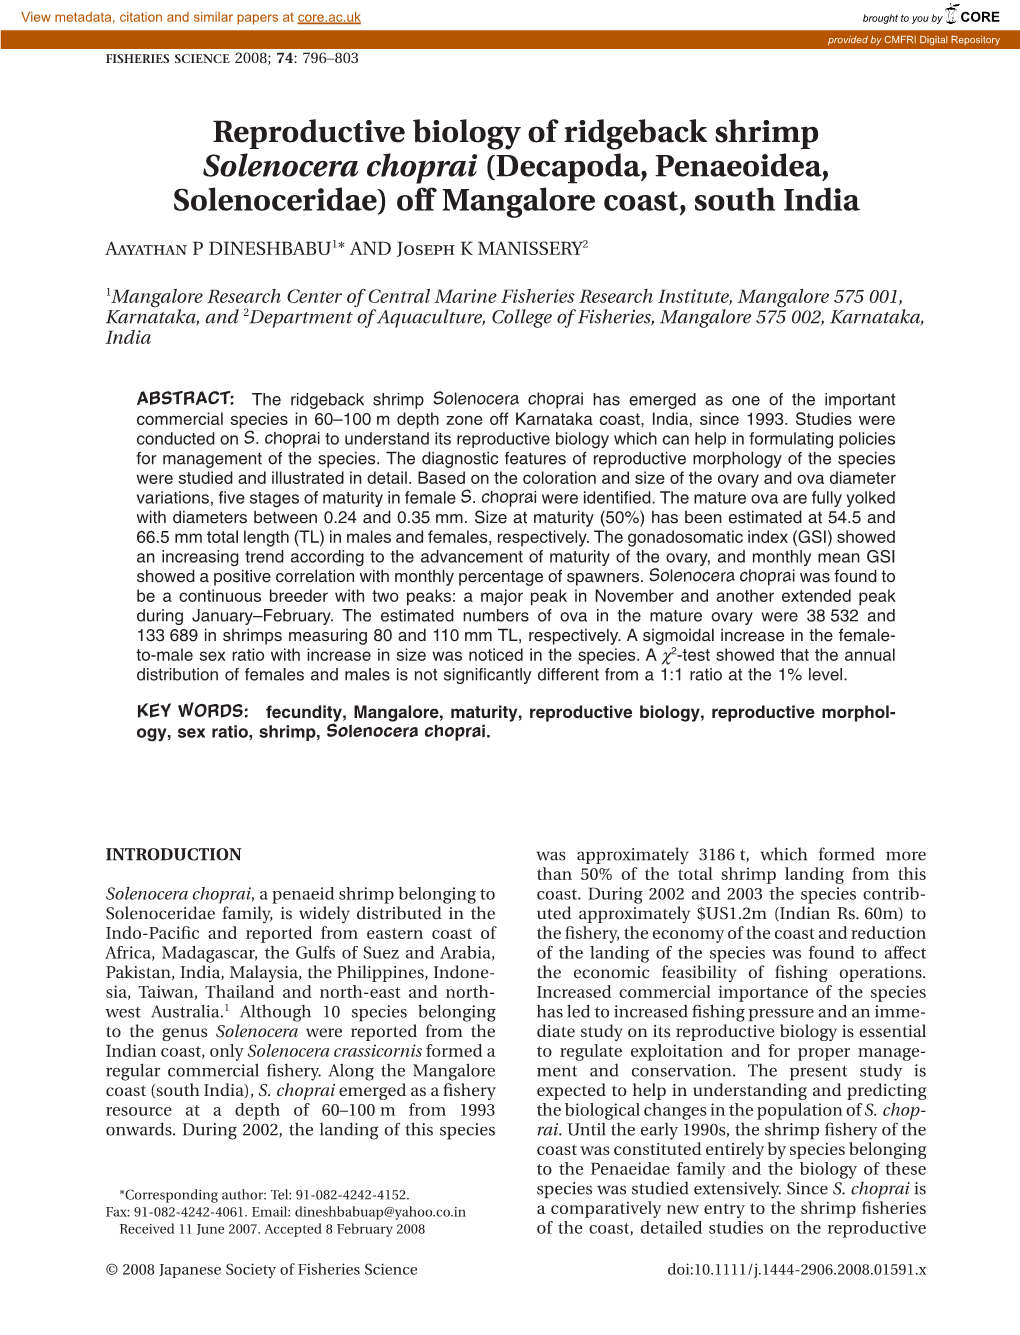 Reproductive Biology of Ridgeback Shrimp Solenocera Choprai (Decapoda, Penaeoidea, Solenoceridae) Off Mangalore Coast, South India